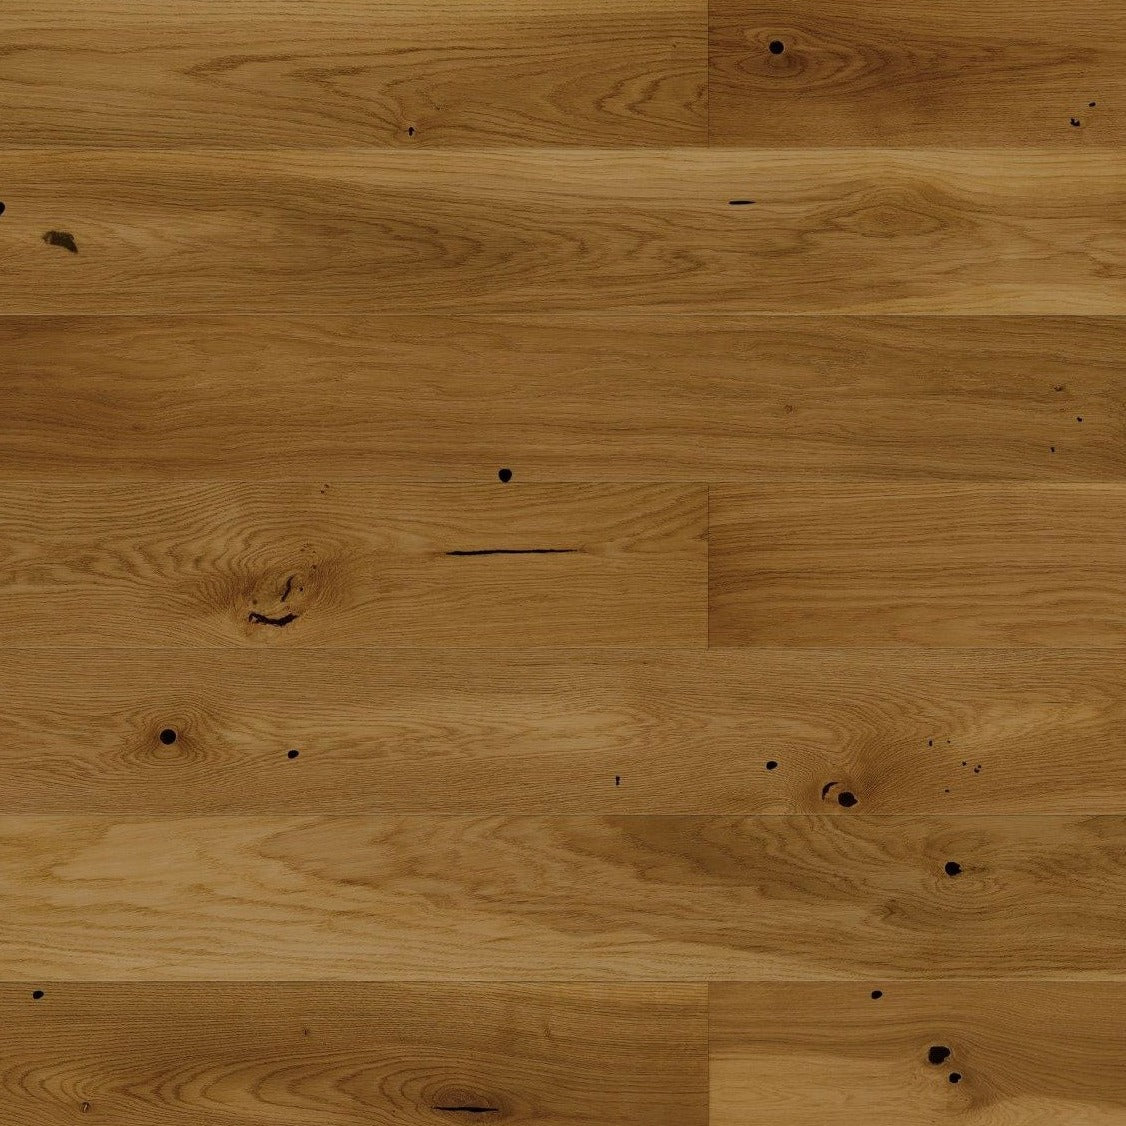 Ashton & Rose Borwick dark solid oak engineered hardwood flooring from our Dark wood flooring collection